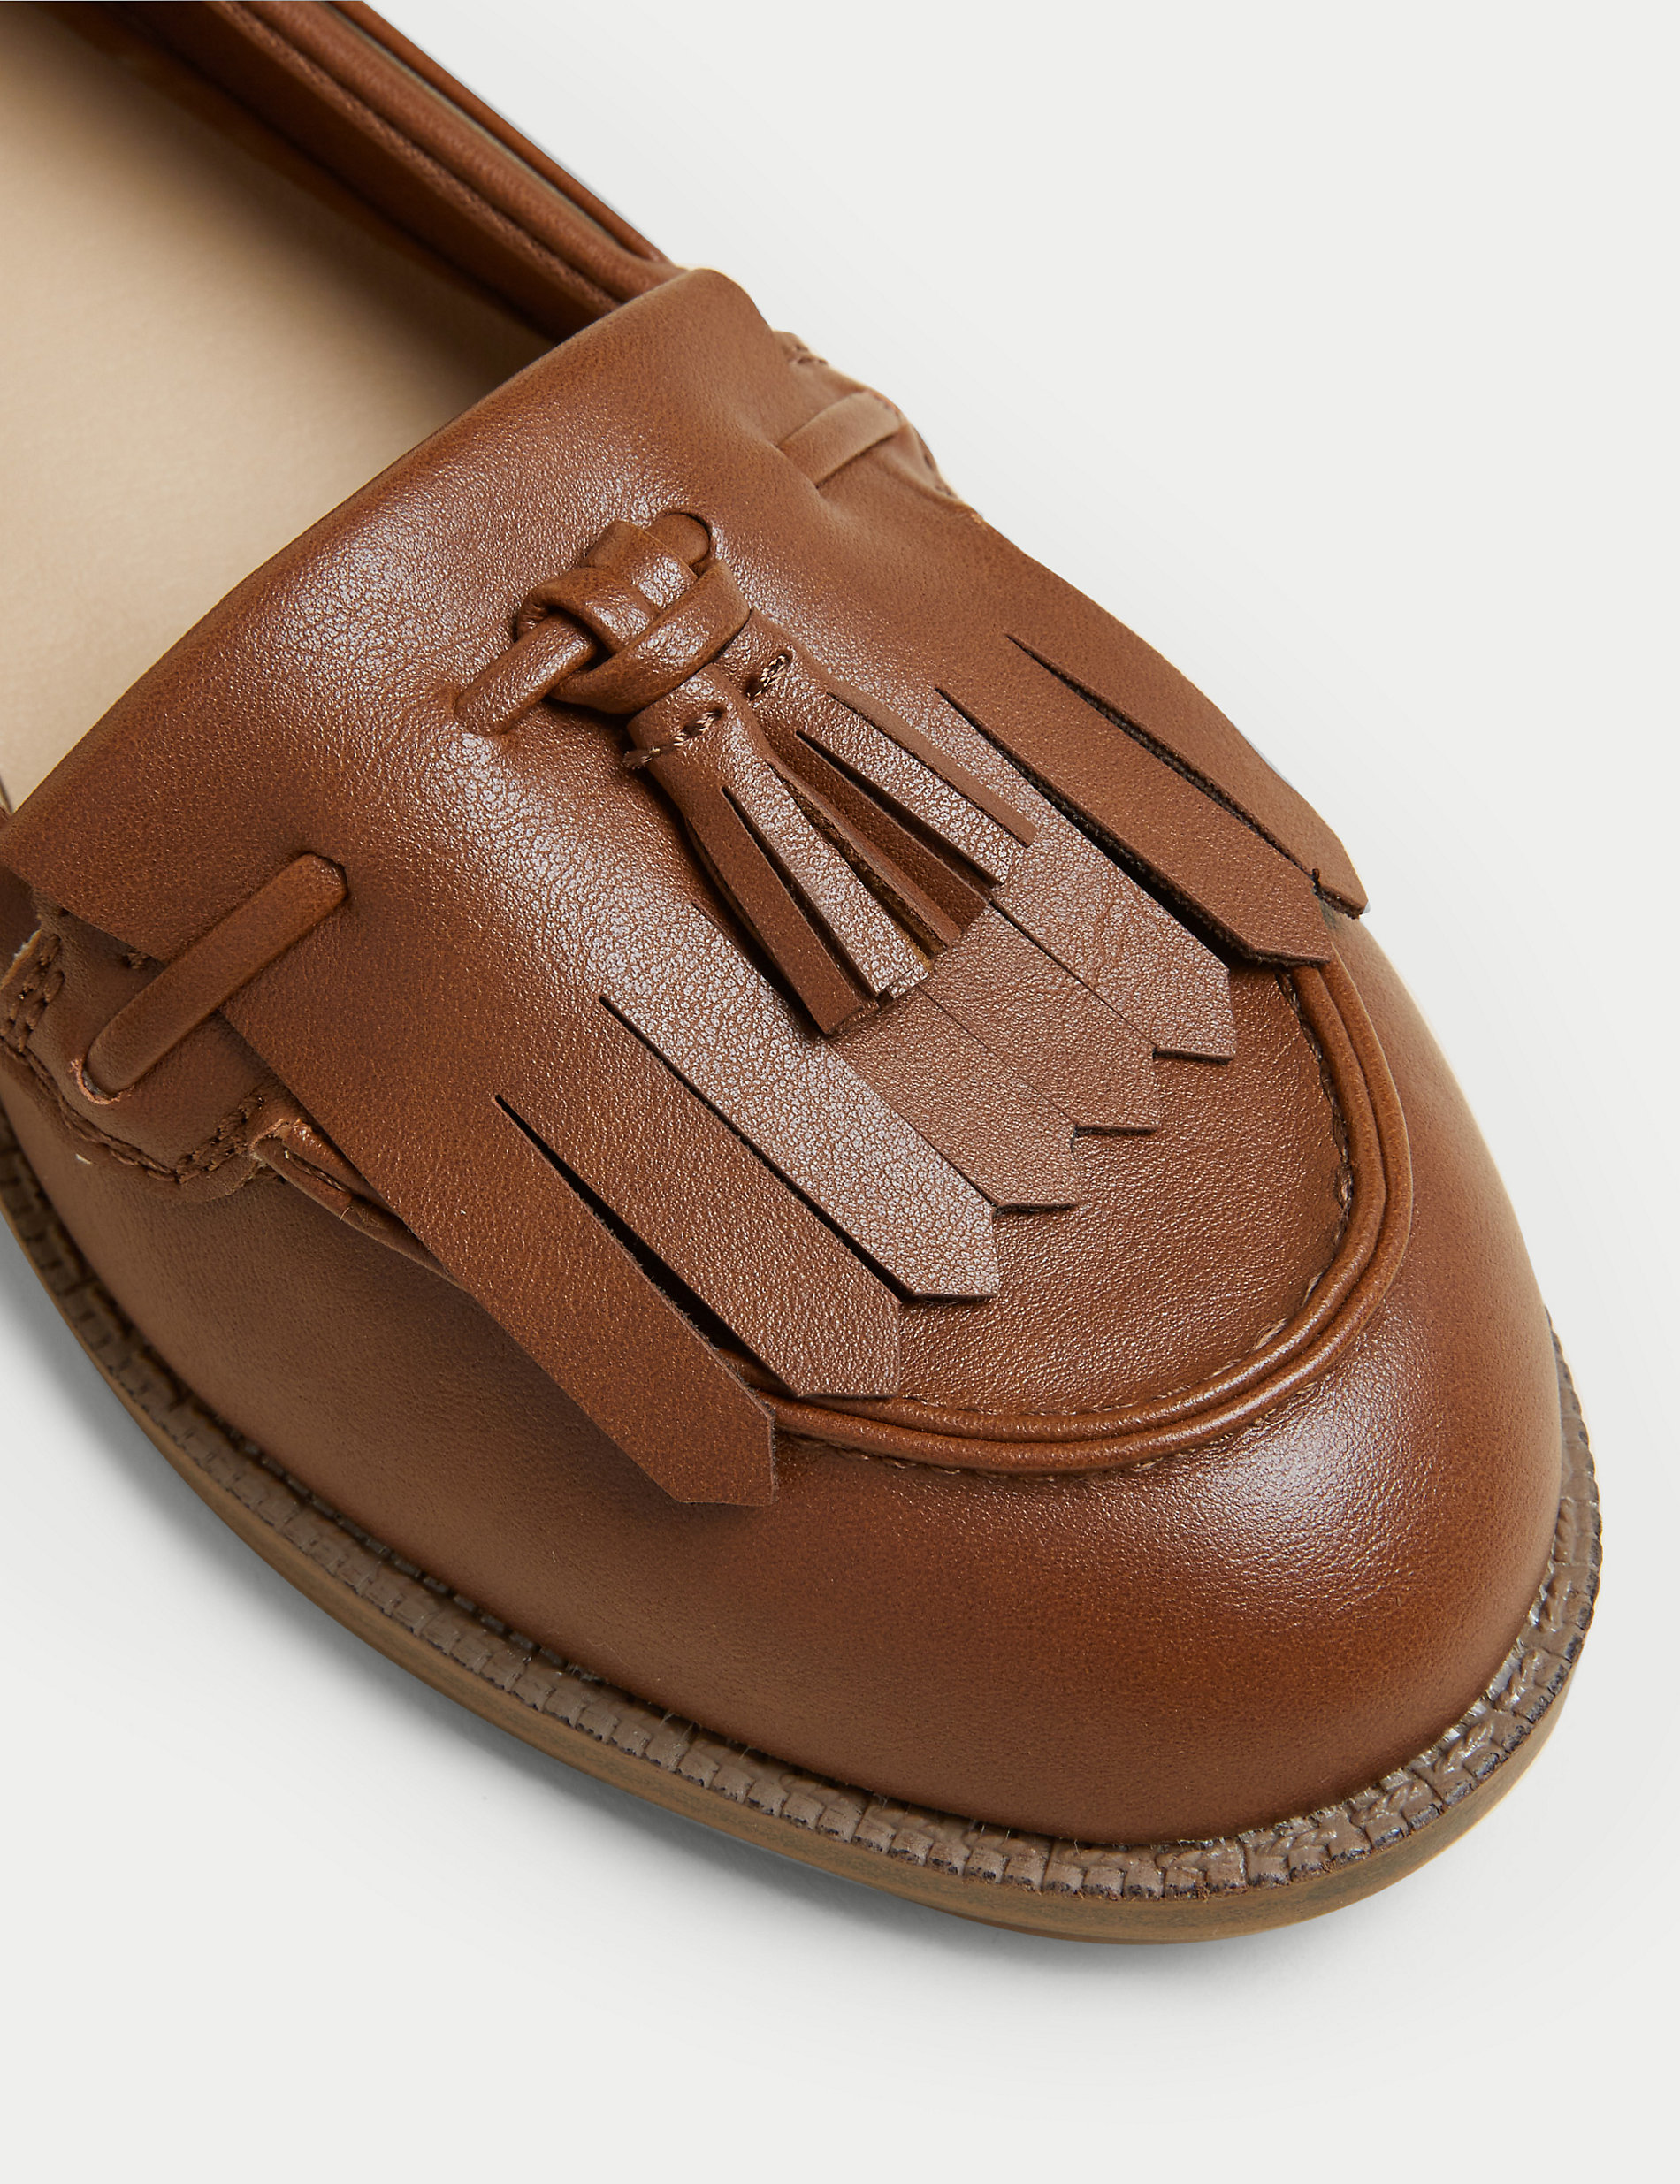 Top Brand Girls Ladies Patent Tassel Loafer Causal School Shoes Gift Sz 11-5 